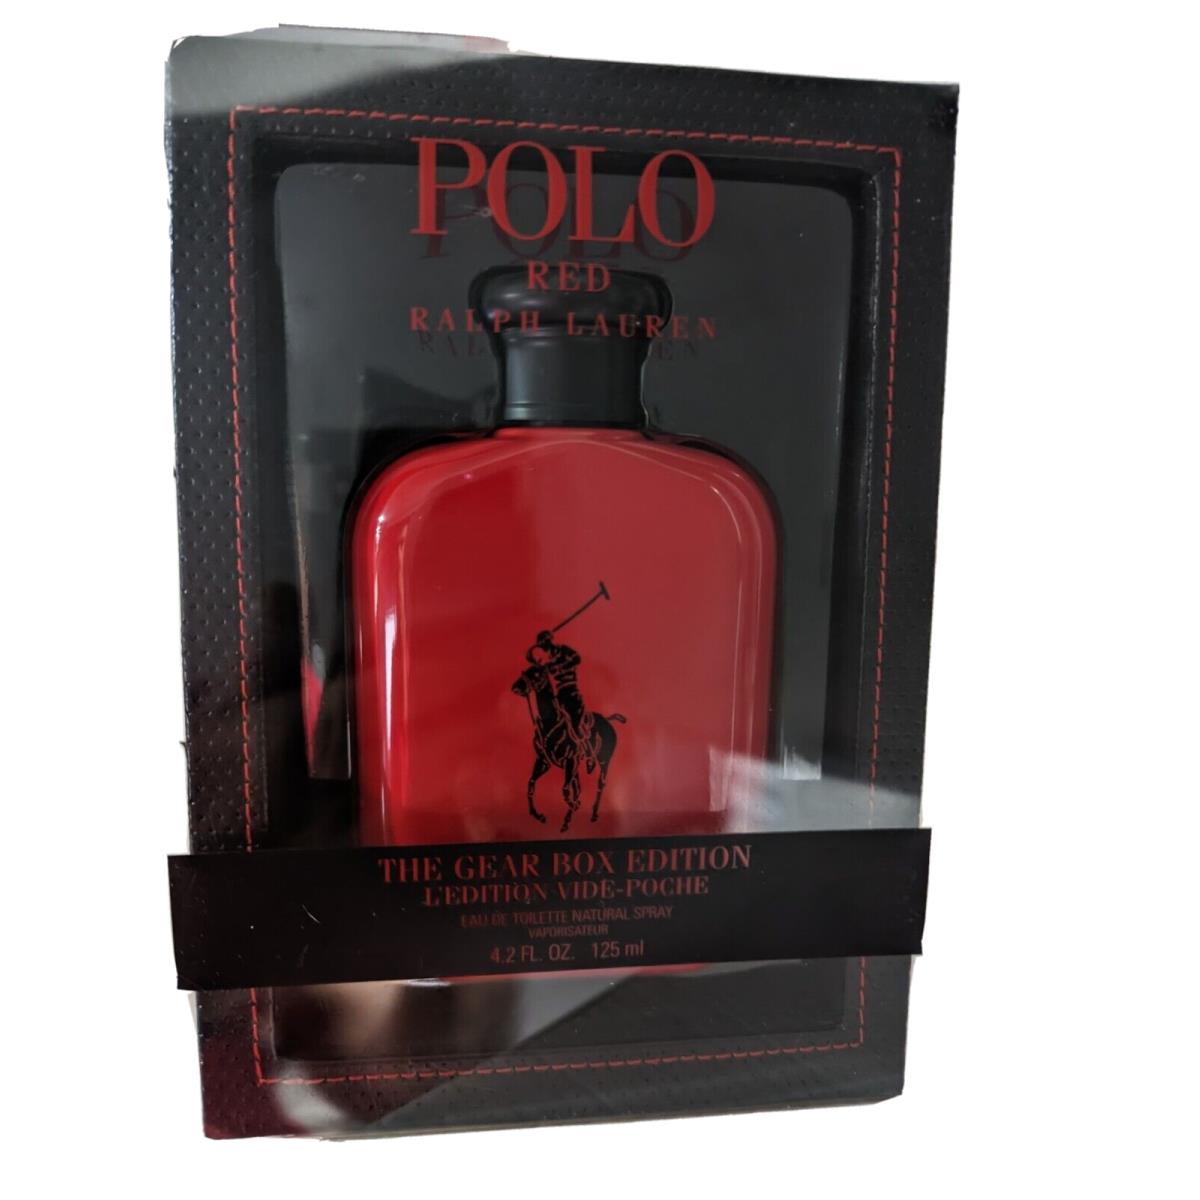 Polo Red Cologne Perfume Ralph Lauren 4.2 Oz 125 ml Edt Spray Men The Gear Box